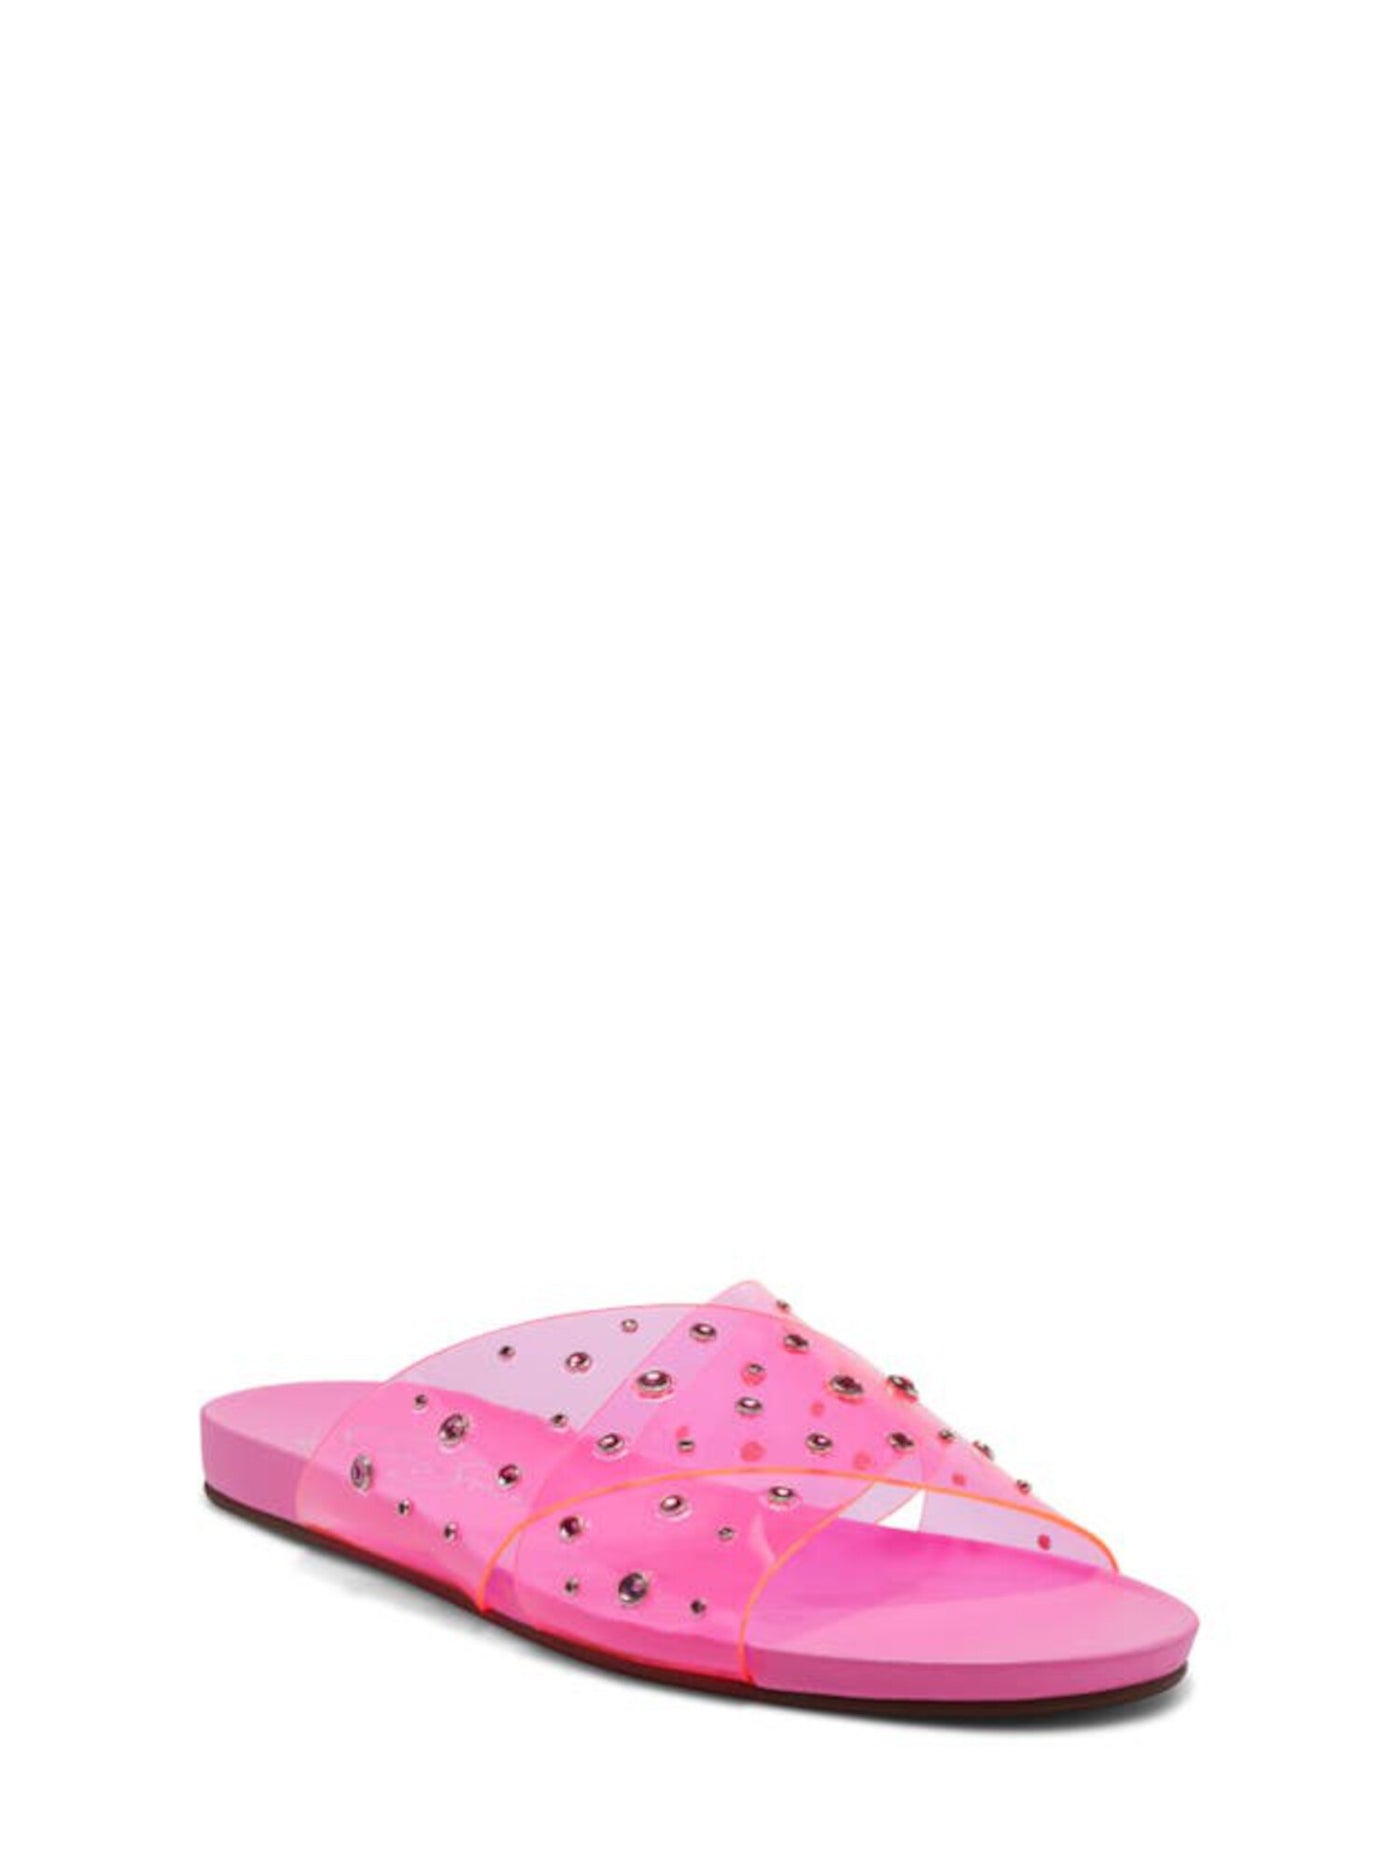 JESSICA SIMPSON Womens Pink Clear Lucite Straps Embellished Rhinestone Tislie Slip On Slide Sandals Shoes 6.5 M